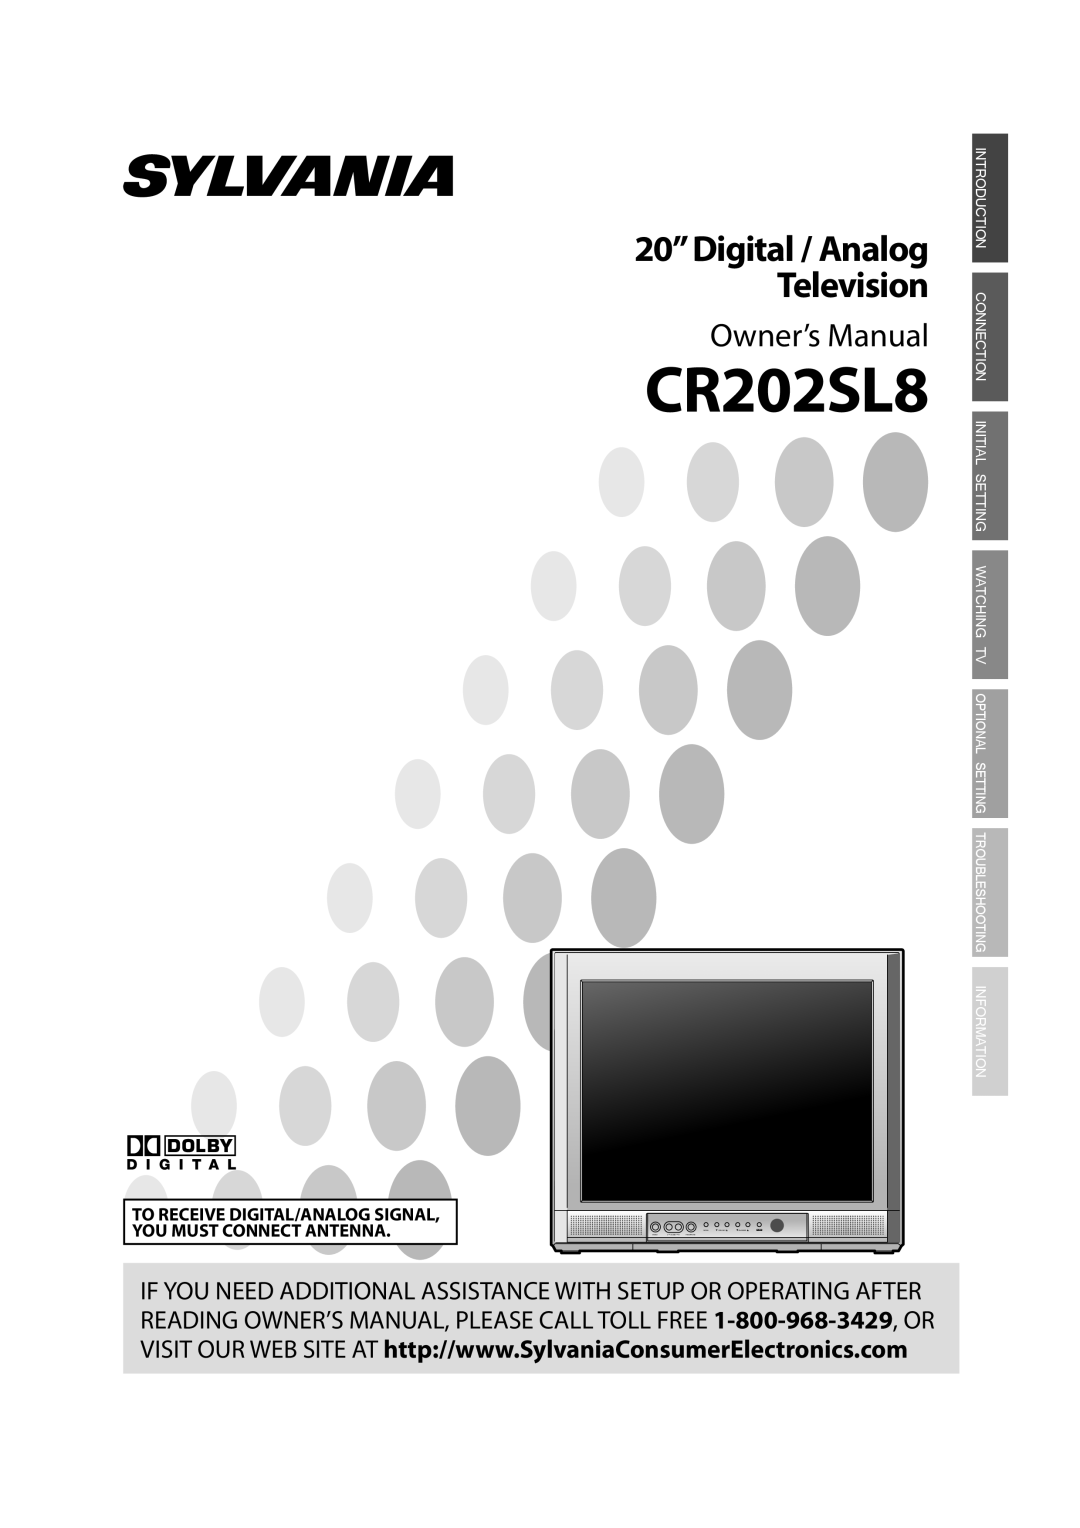 Sylvania CR202SL8 owner manual Owner’s Manual, 20”Digital / Analog Television 